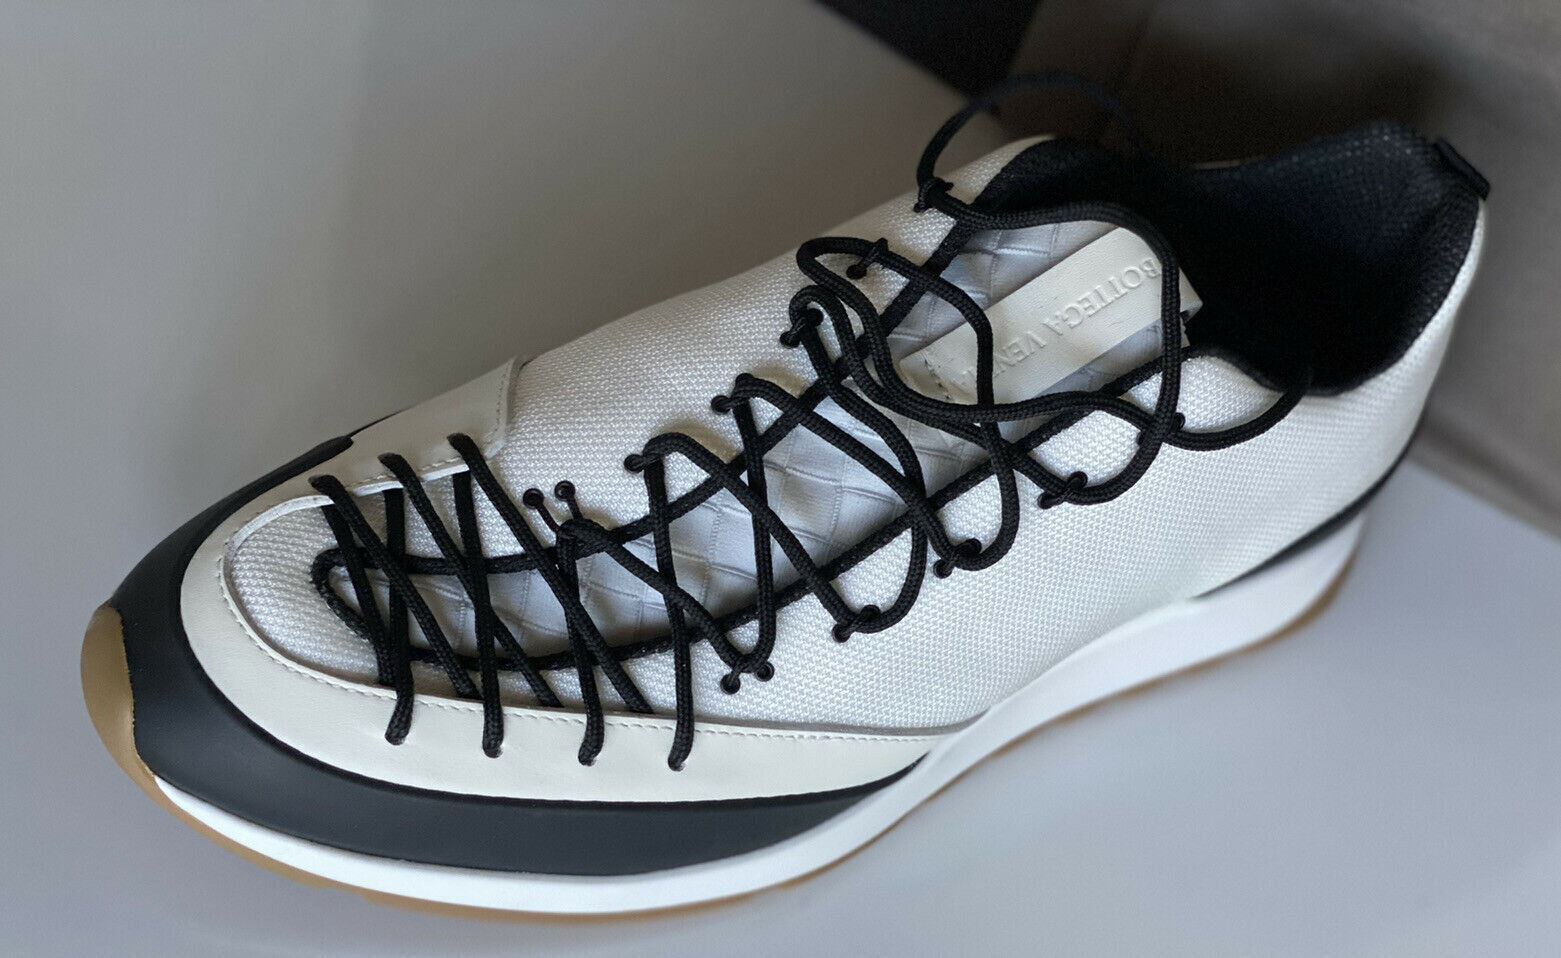 NIB $790 Bottega Veneta Men's Scar Tex White Sneakers 9 US (42 Euro) 609891